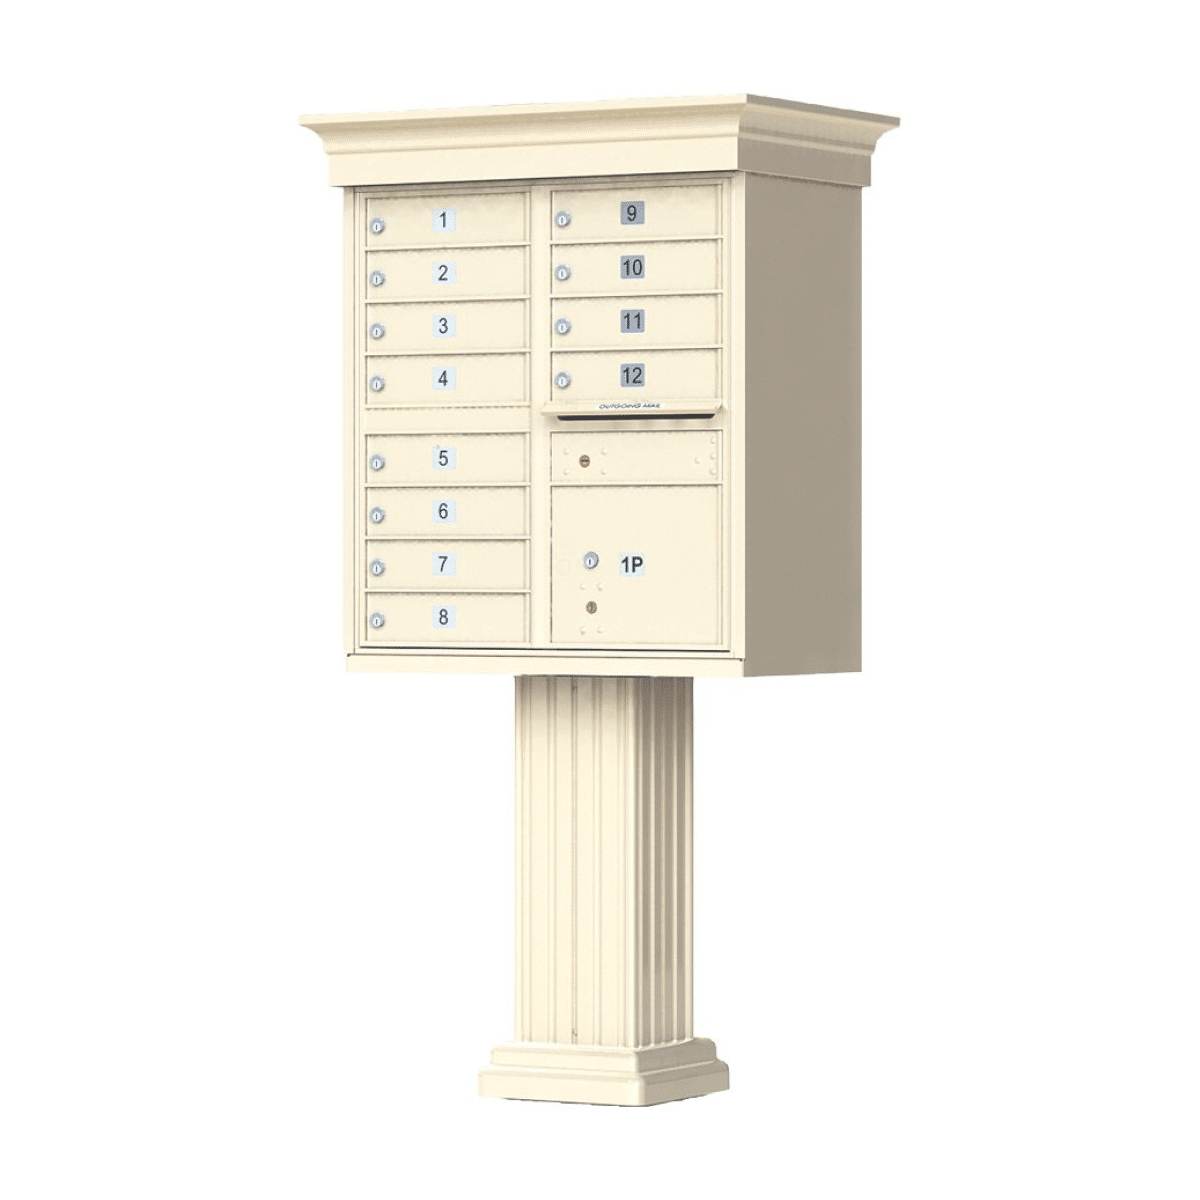 Florence CBU Cluster Mailbox – Vogue Classic Kit, 12 Tenant Doors, 1 Parcel Locker Product Image